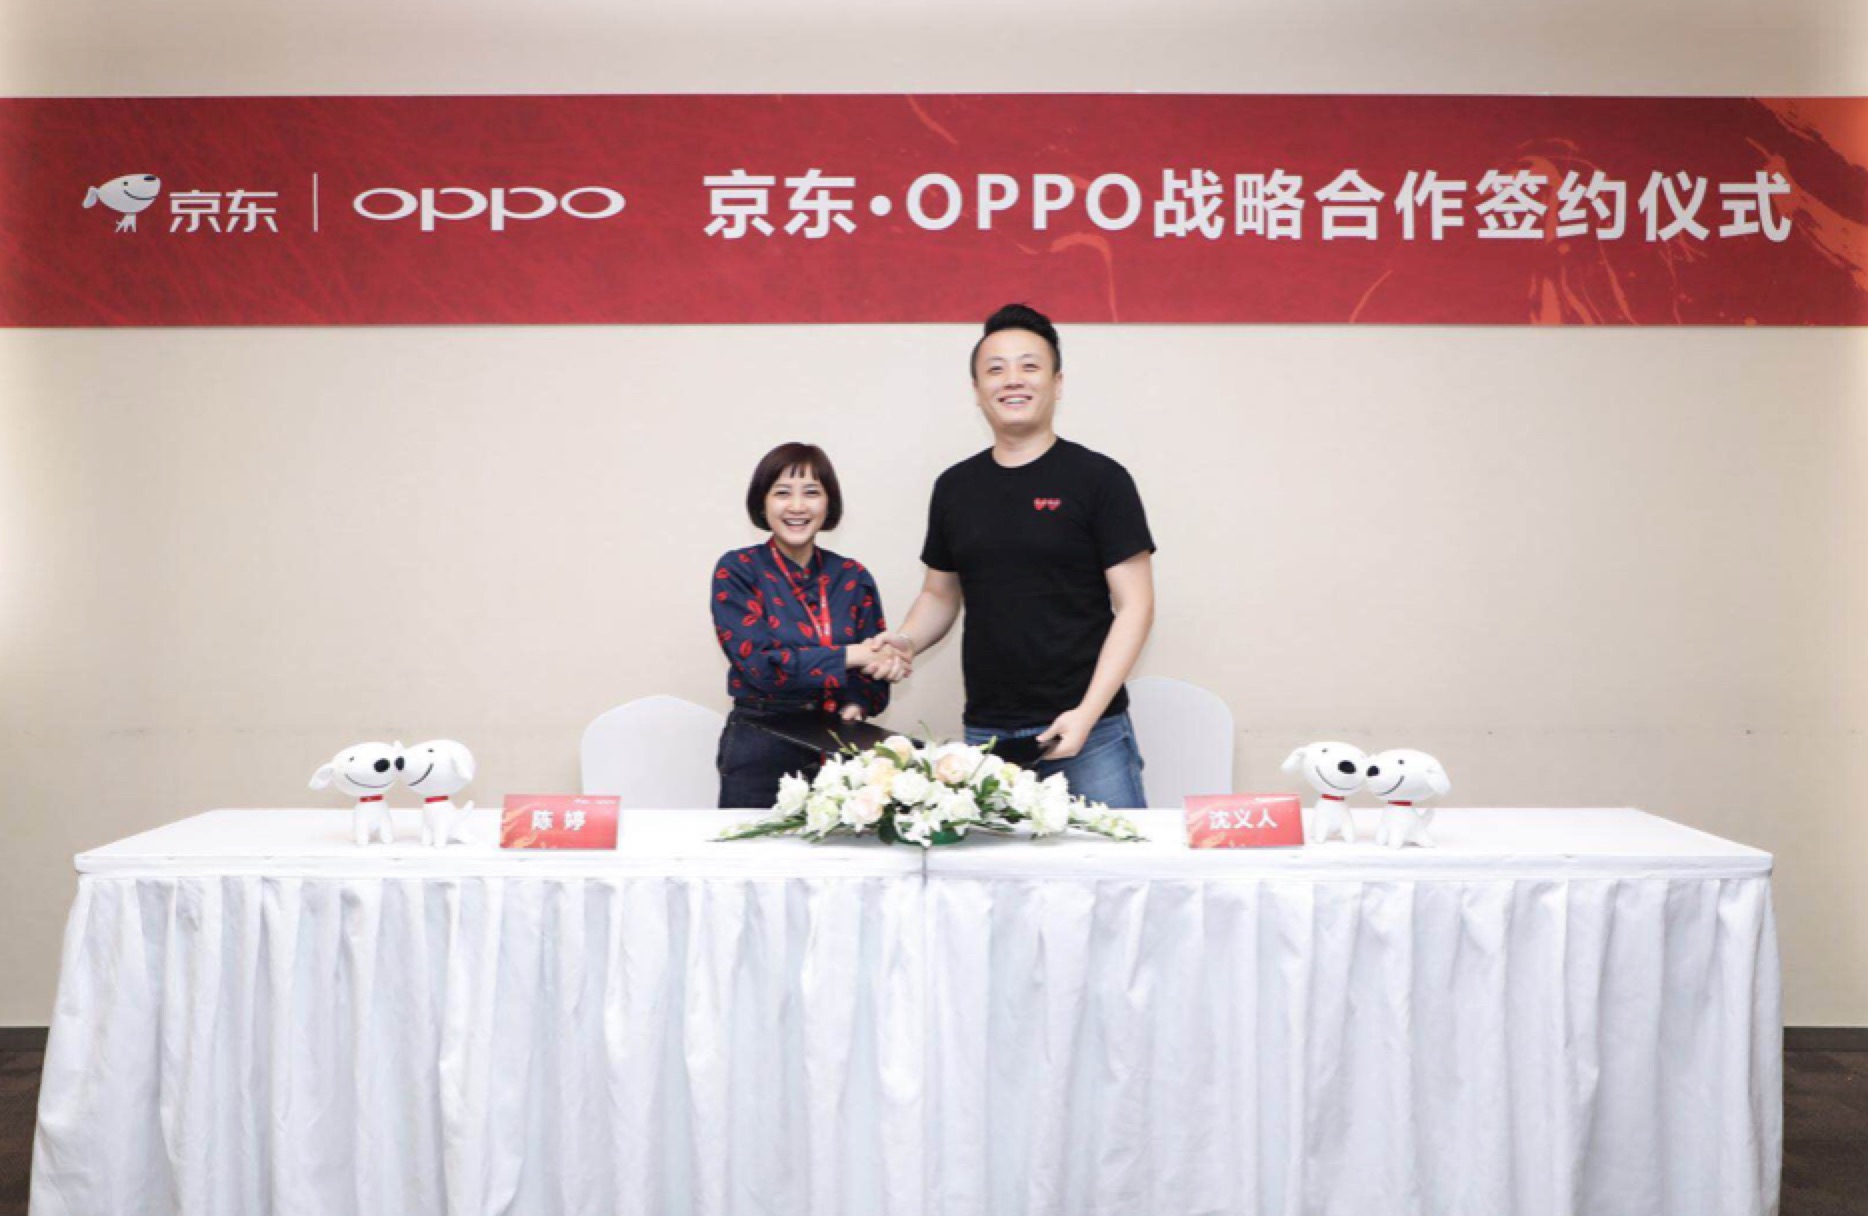 OPPO与京东达成战略合作  进一步完善市场渠道布局